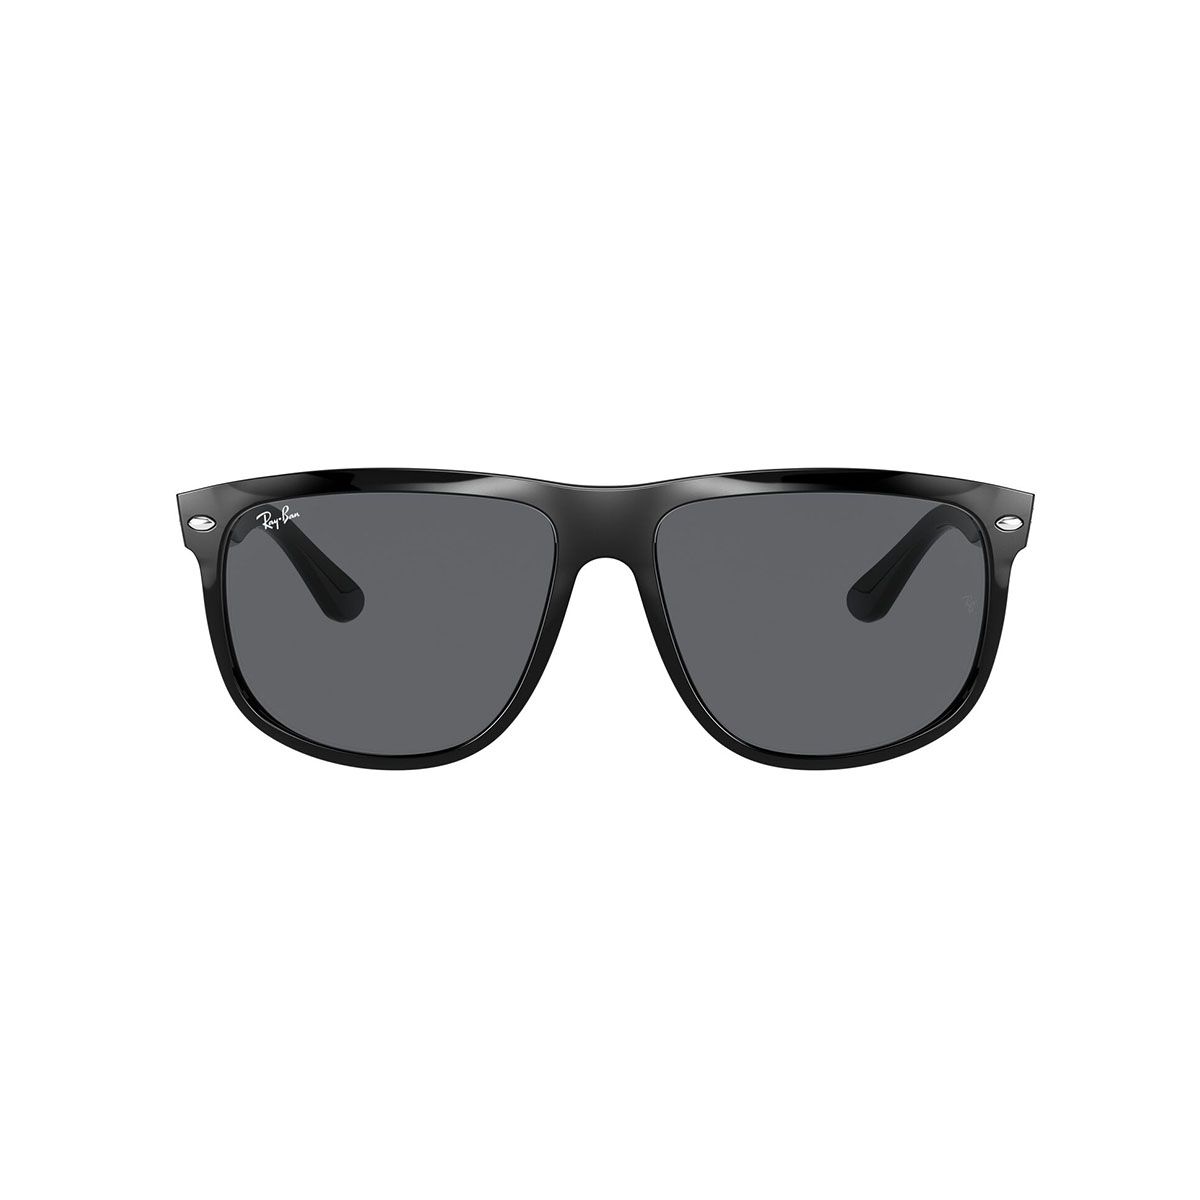 RB4147  - Sunglasses 601 87 - size 56